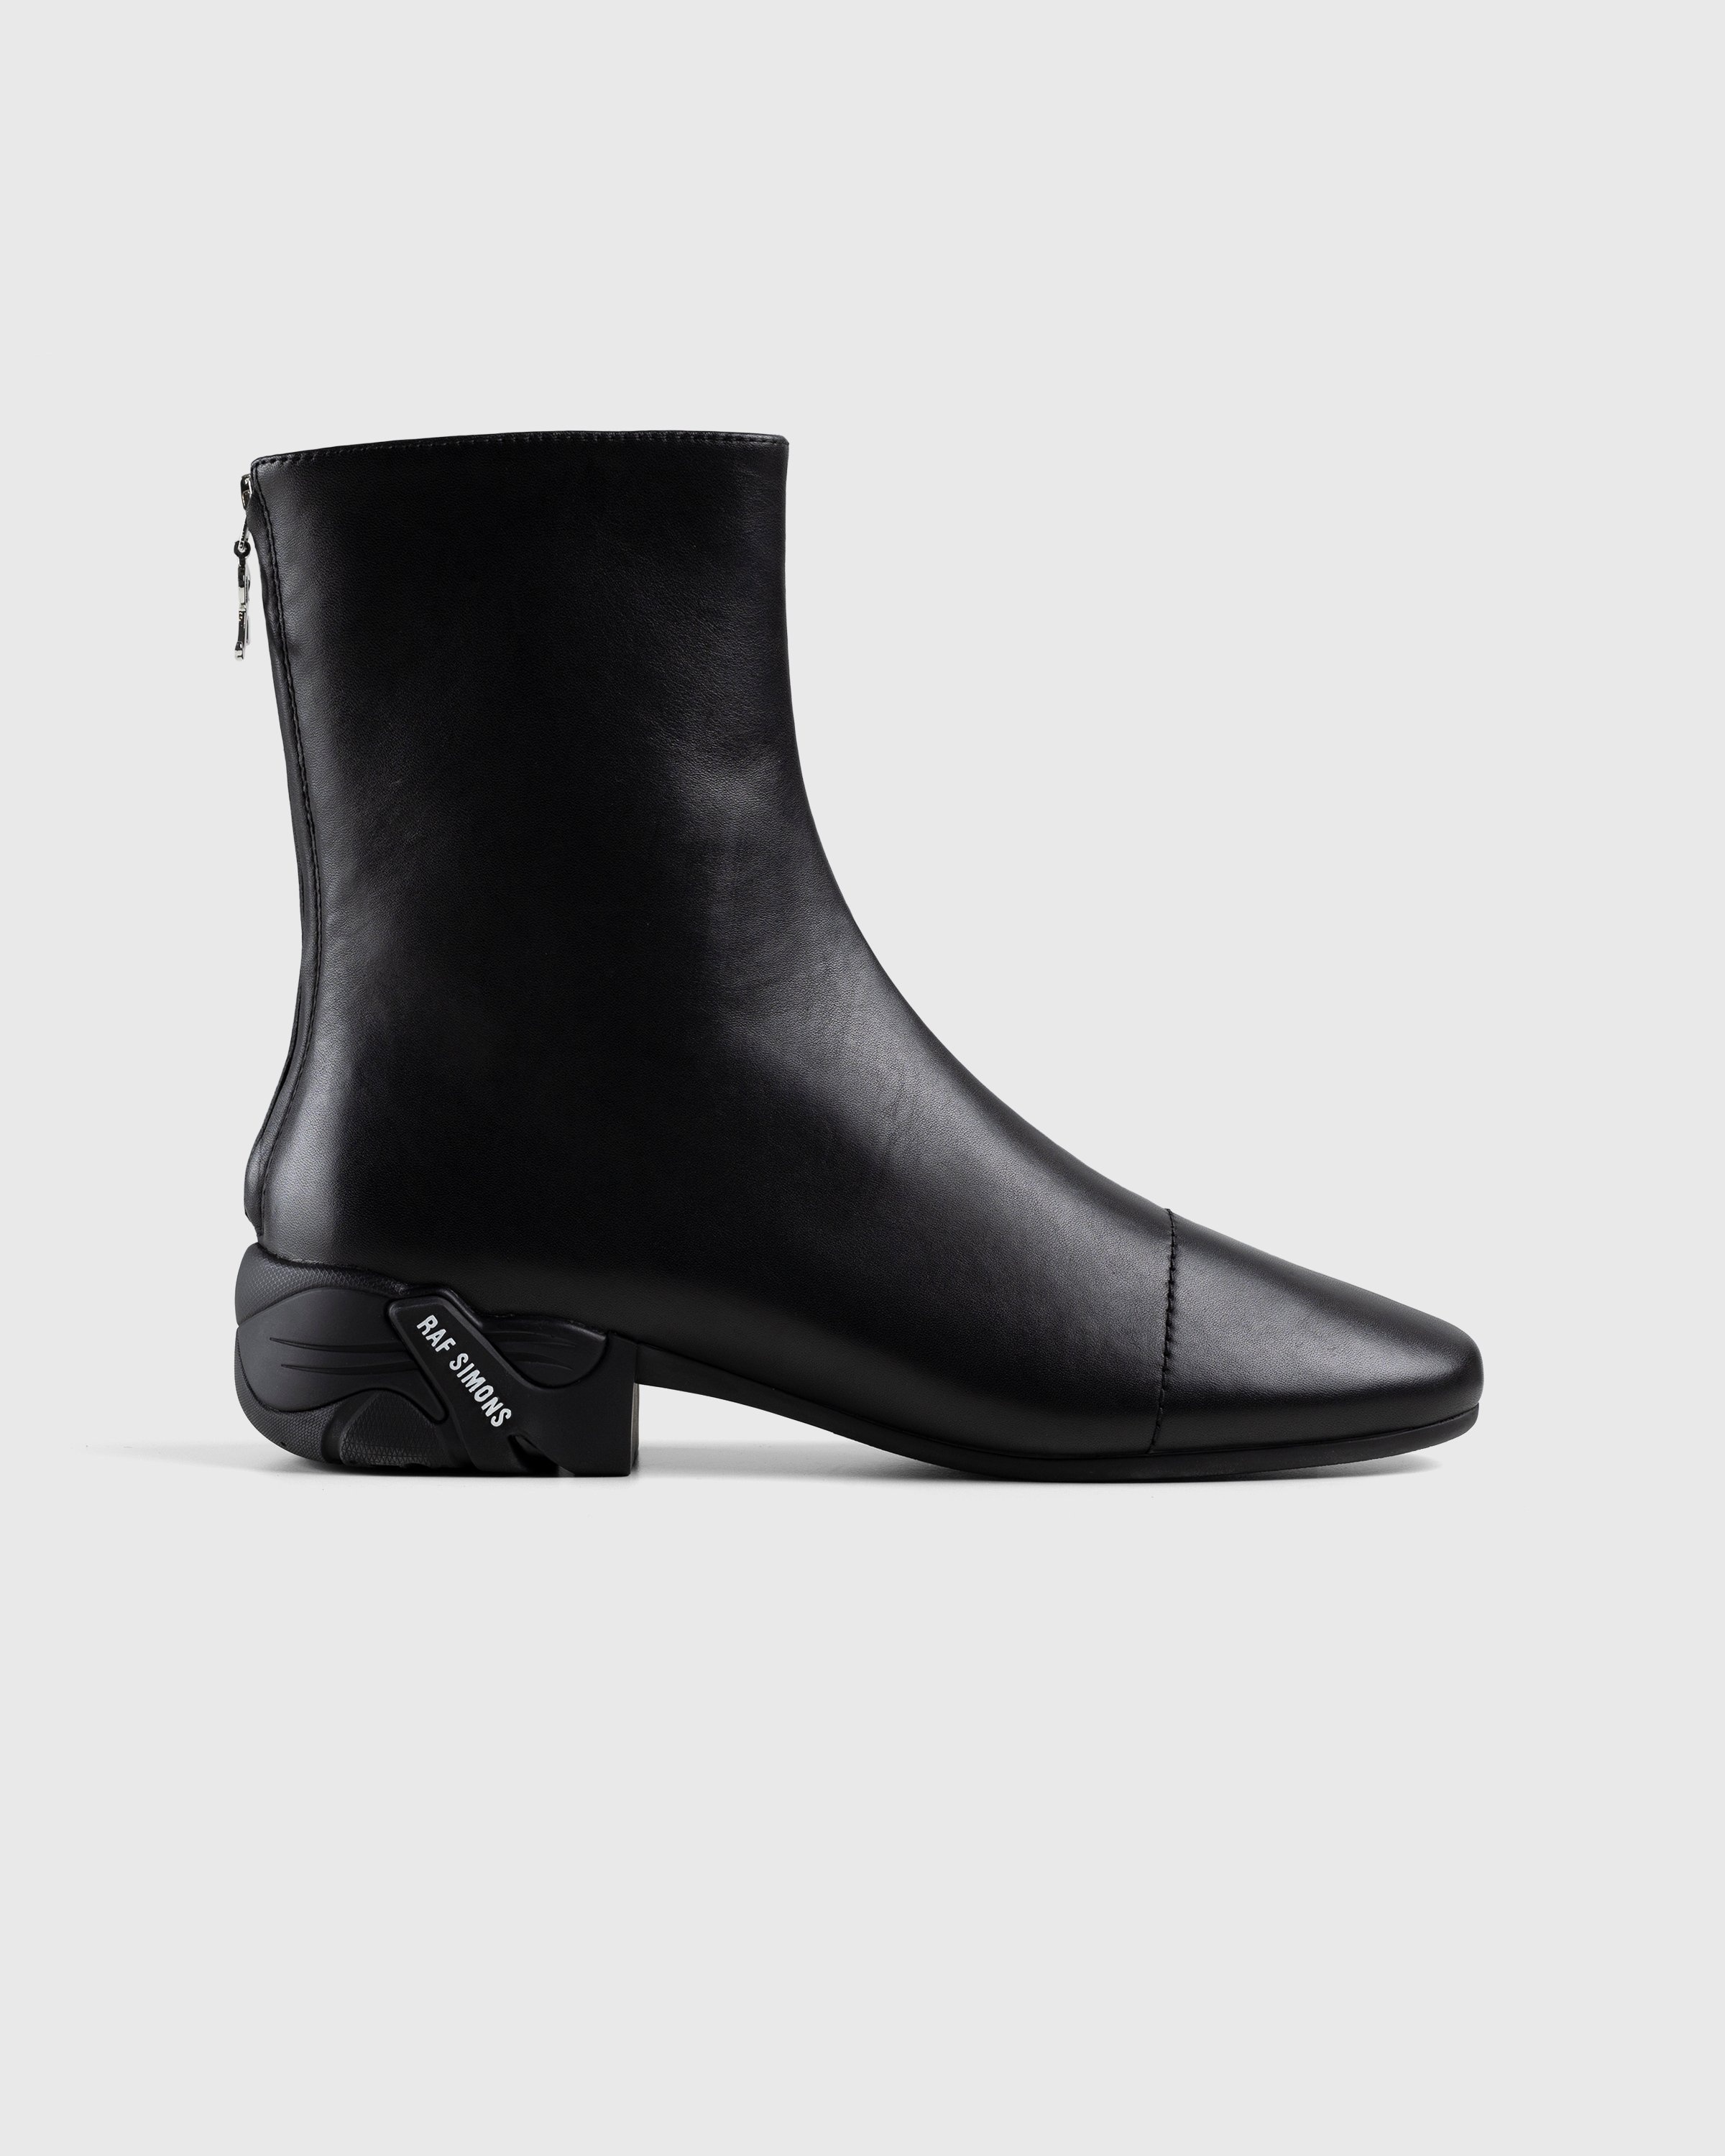 Raf Simons – Solaris High Leather Boot Black - Heels - Black - Image 1